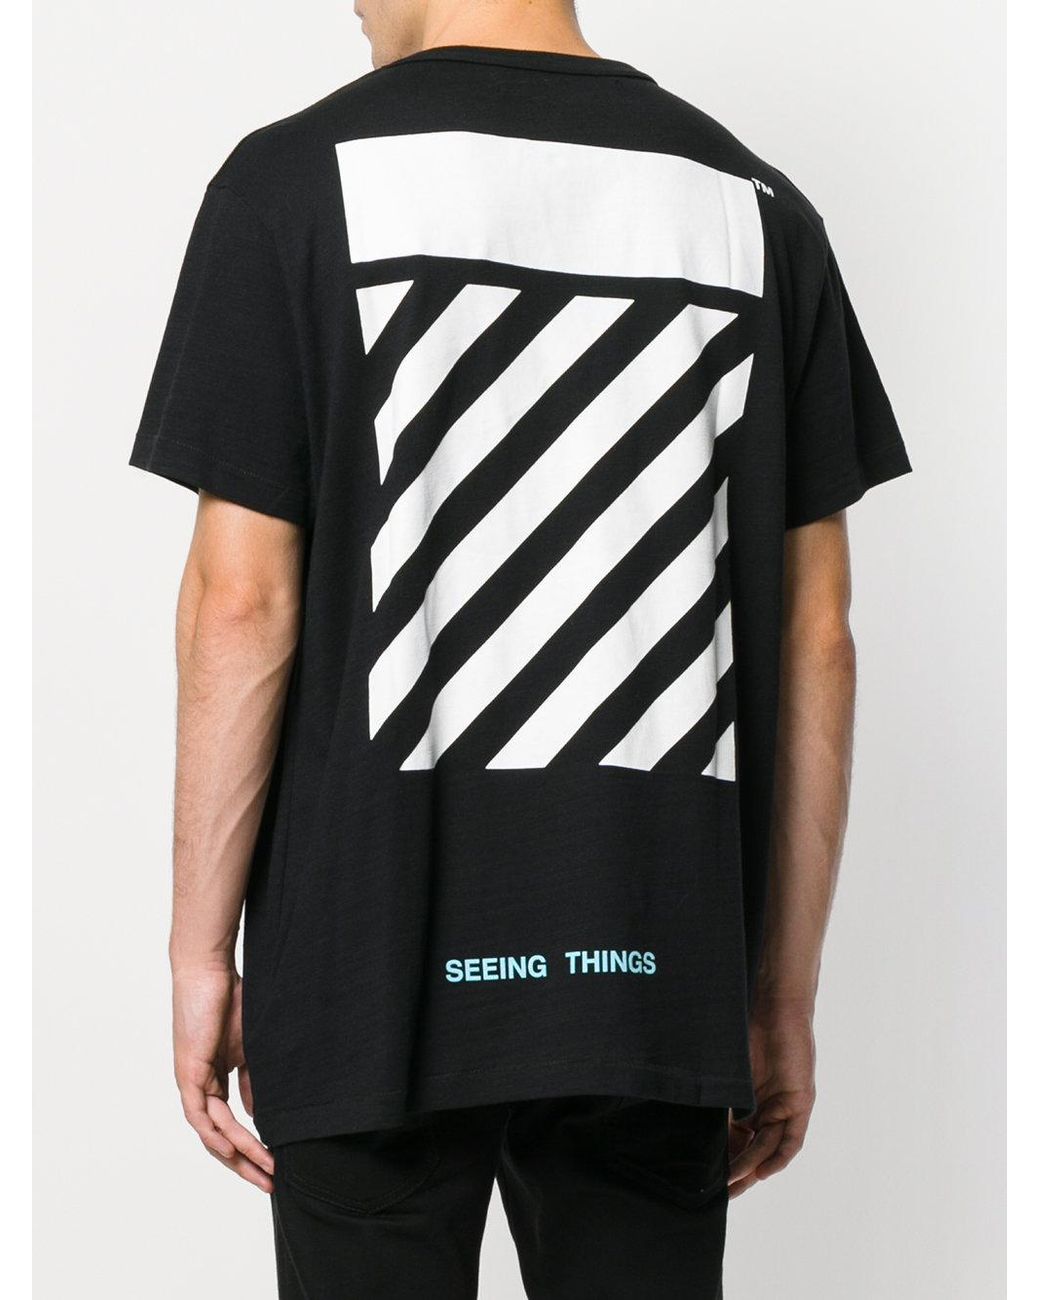 Off-White c/o Virgil Abloh Seeing Things T-shirt in Black for Men | Lyst